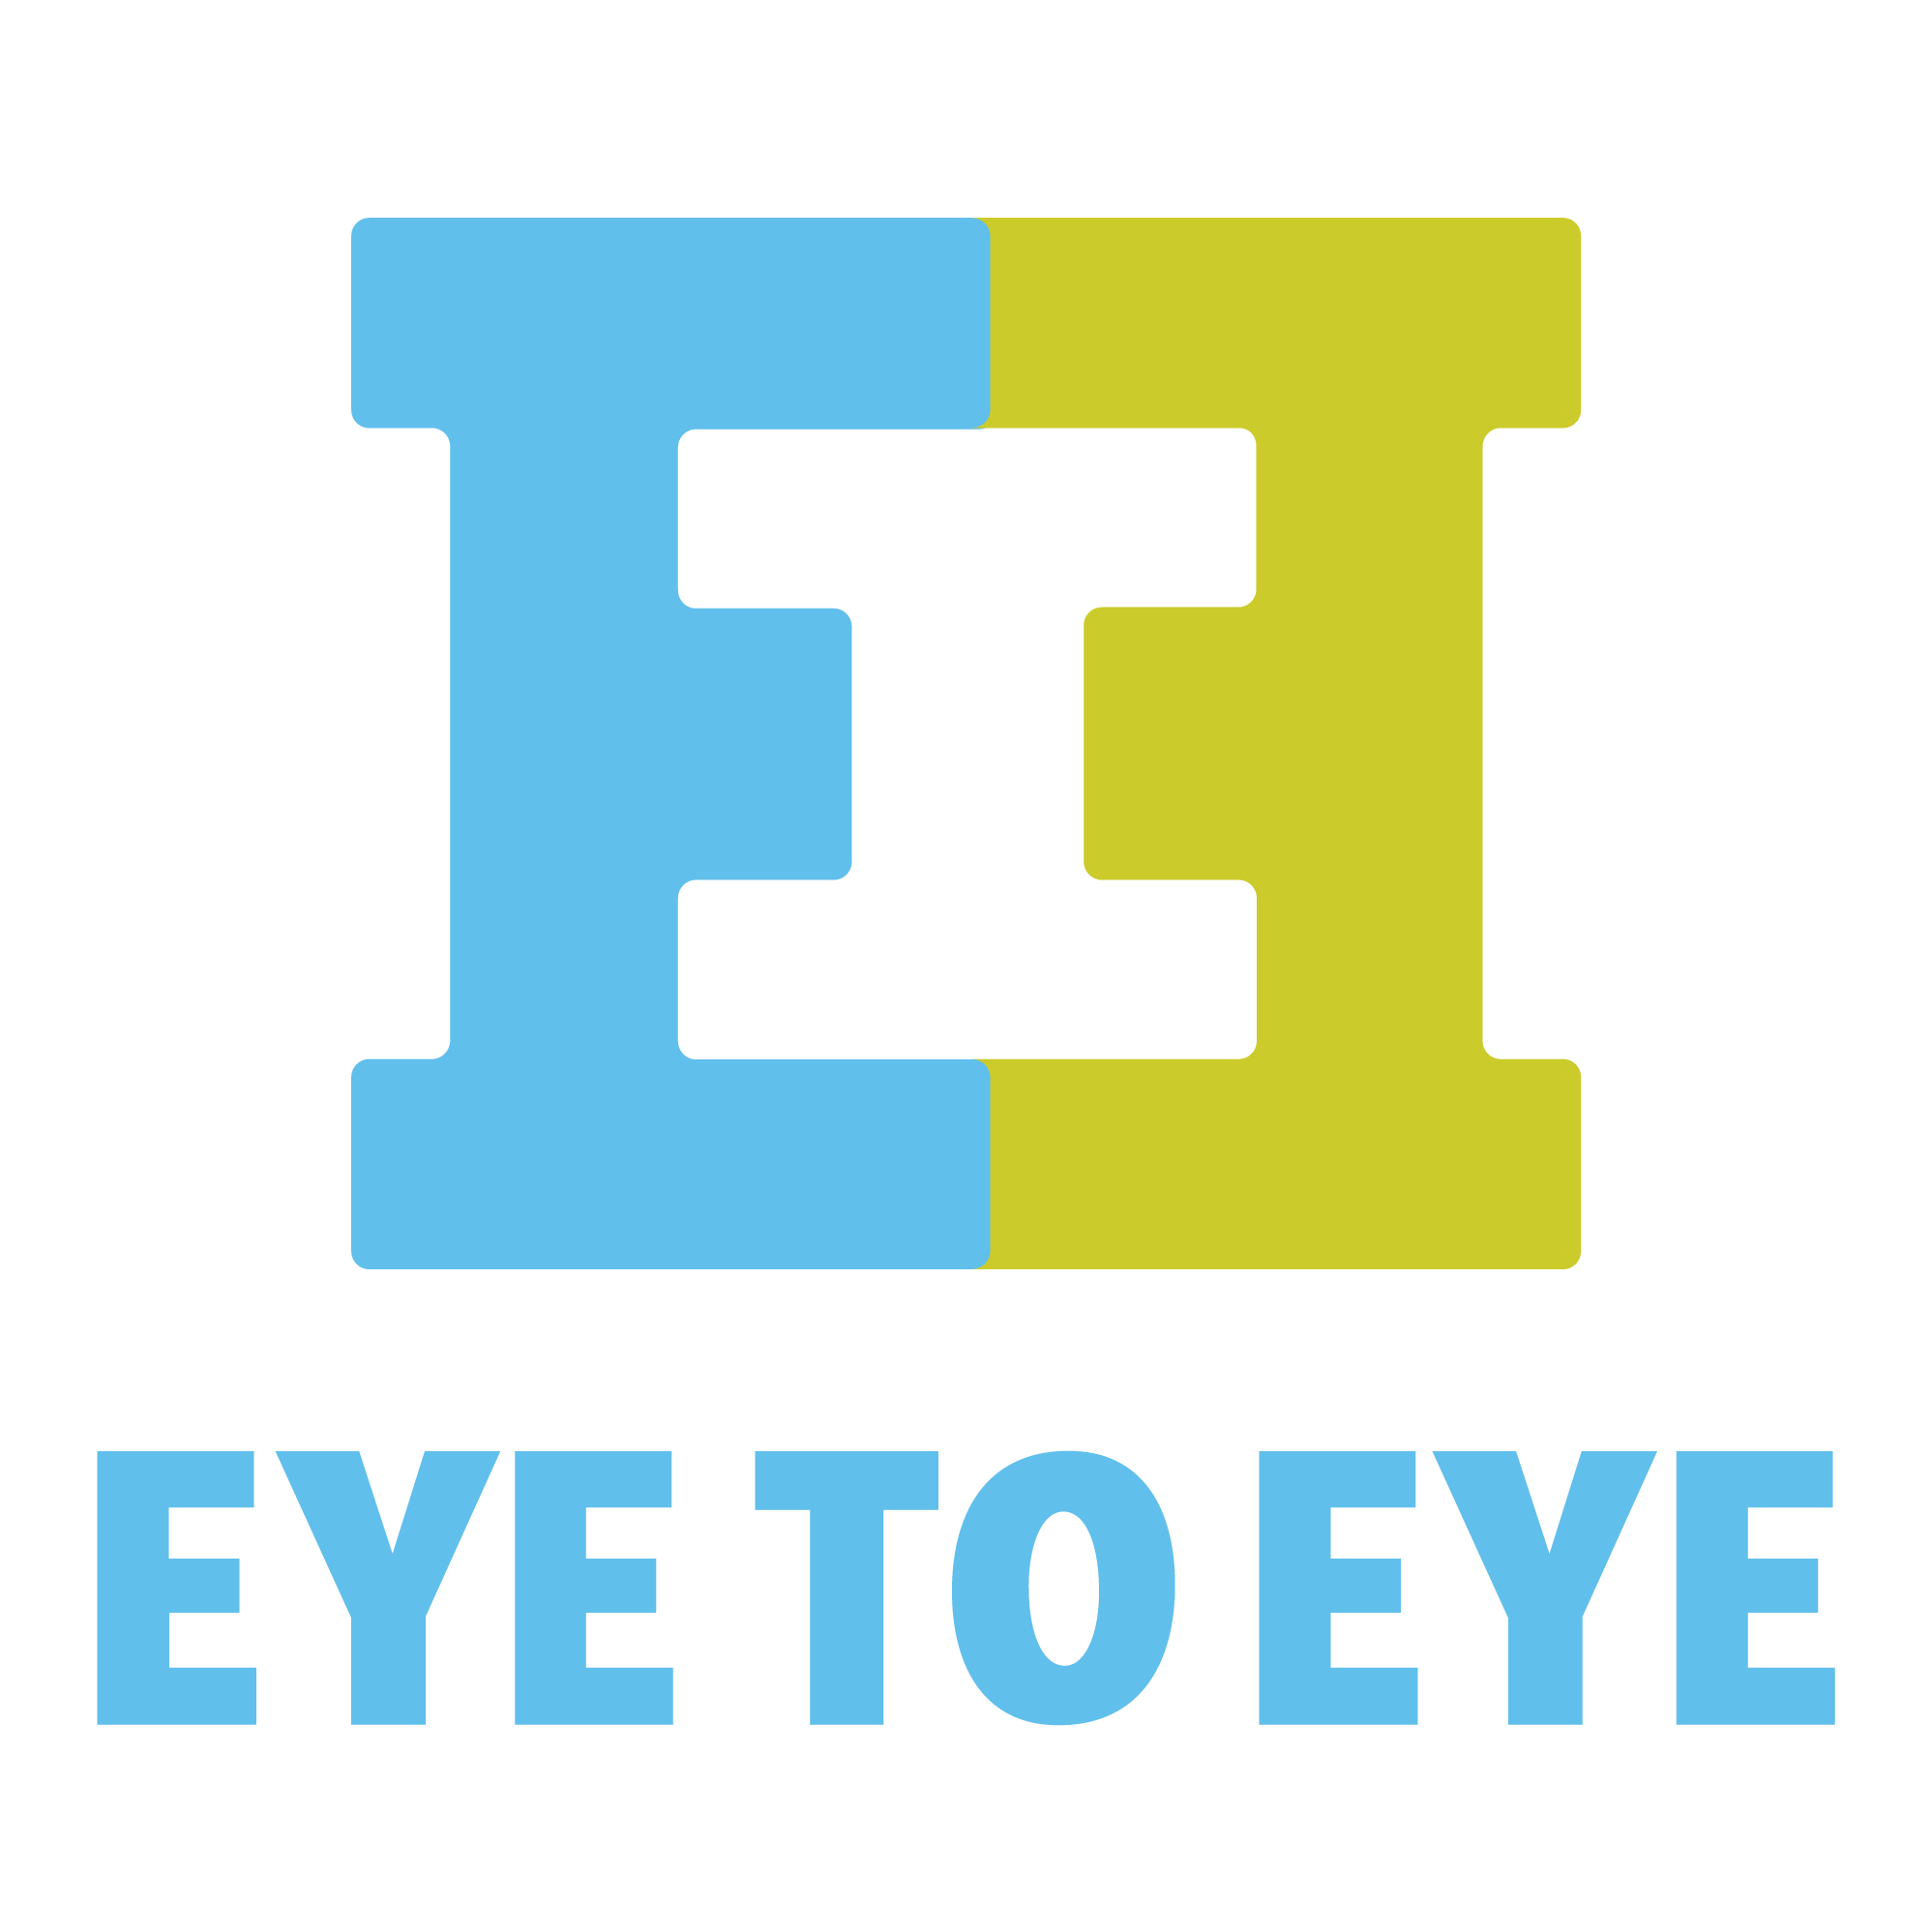 Eye to Eye logo